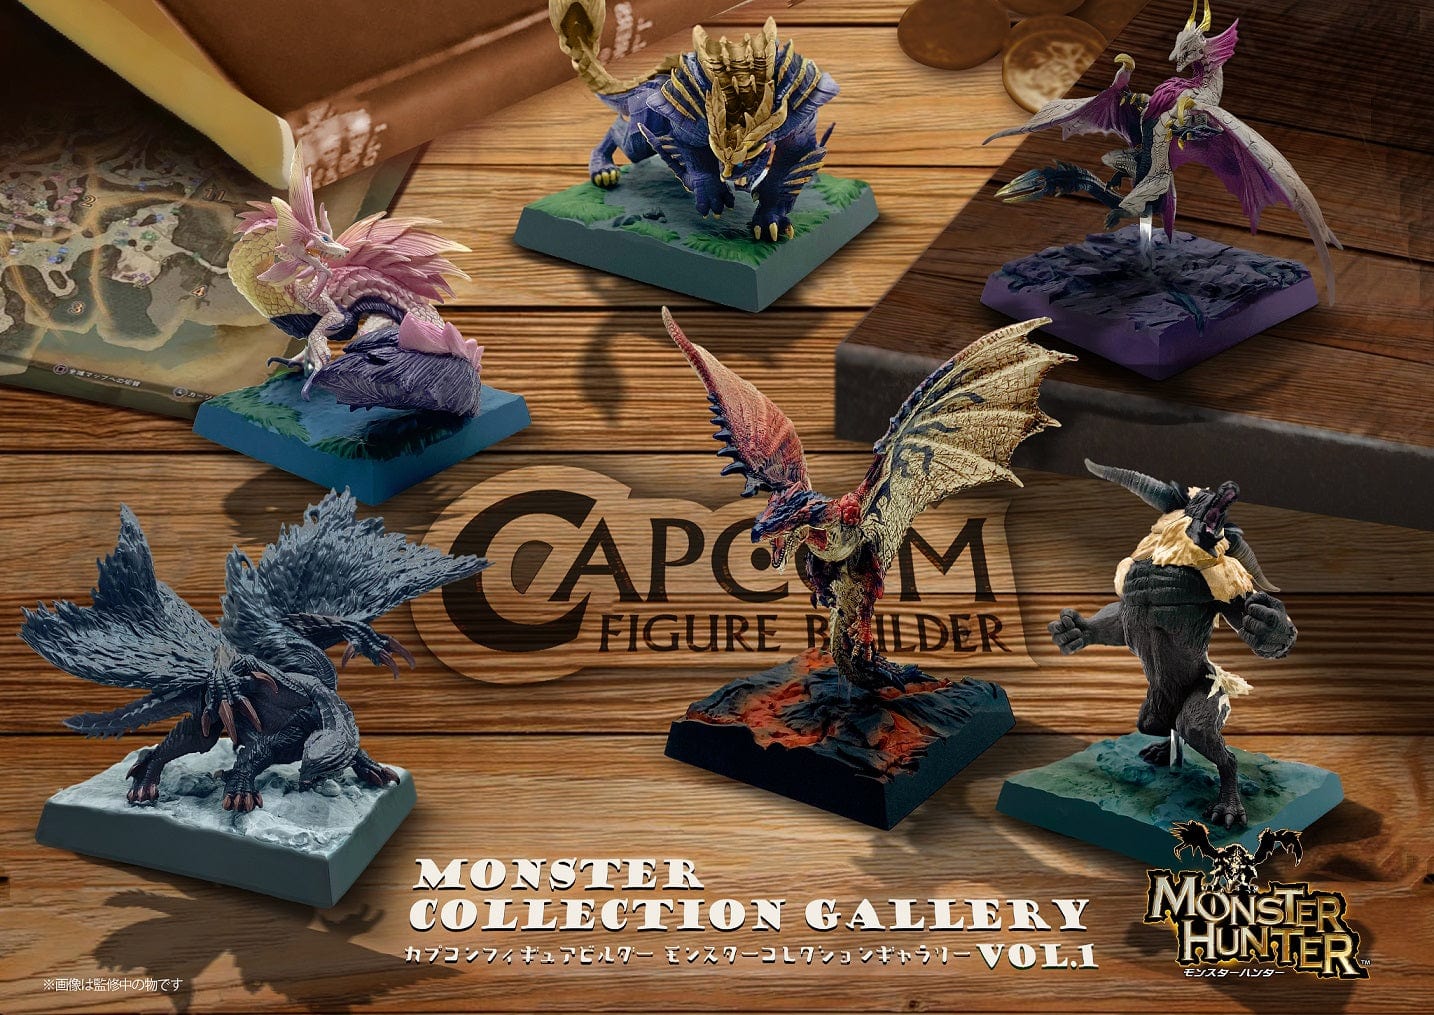 Capcom Capcom Figure Builder Monster Hunter Monster Collection Gallery Vol 1